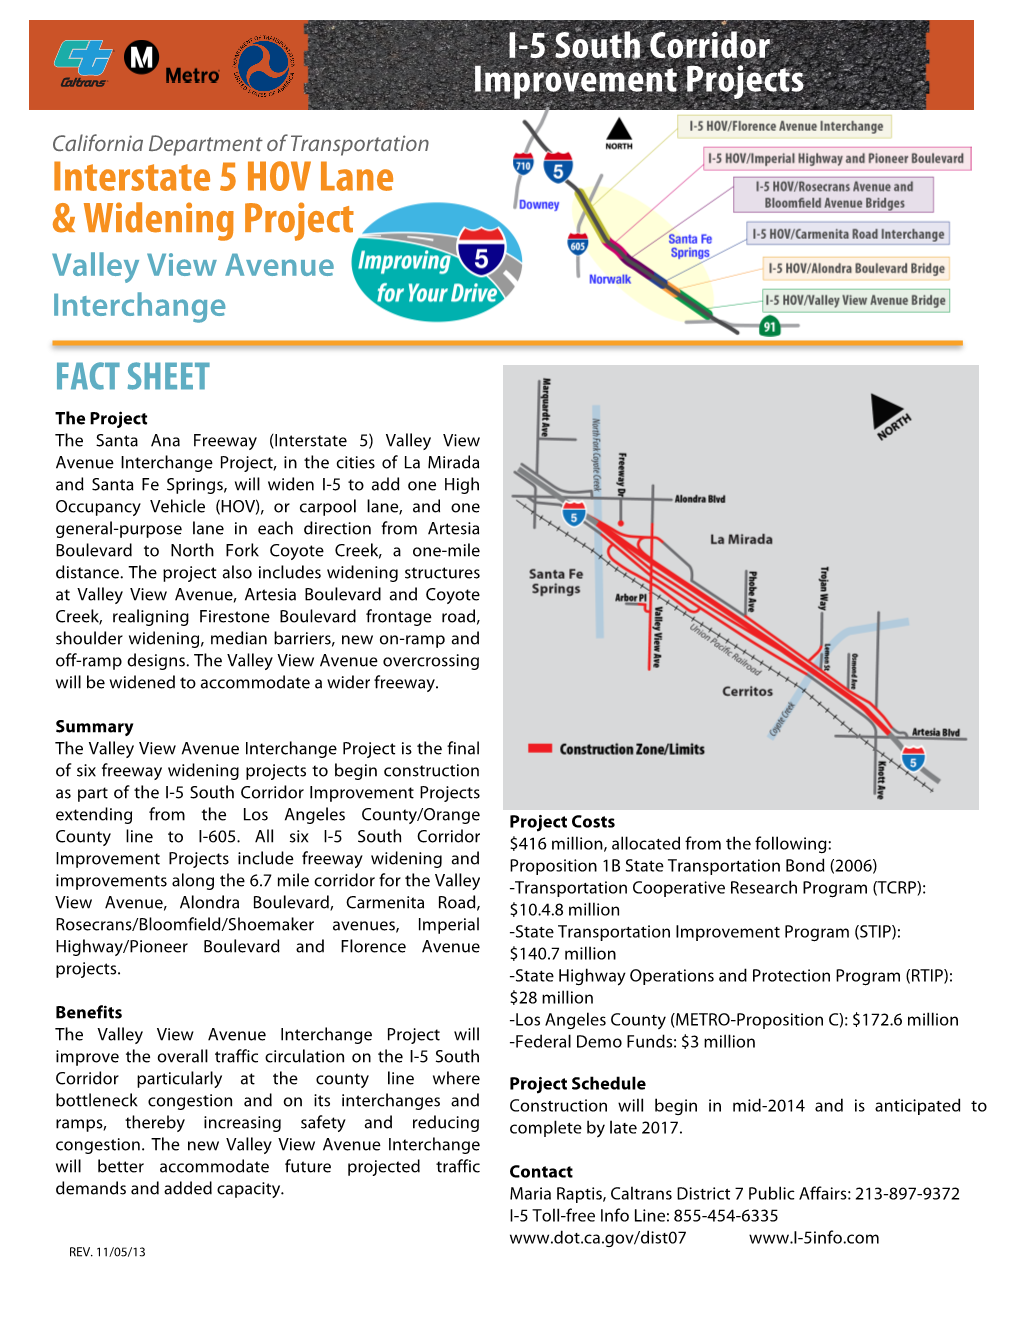 Interstate 5 HOV Lane & Widening Project